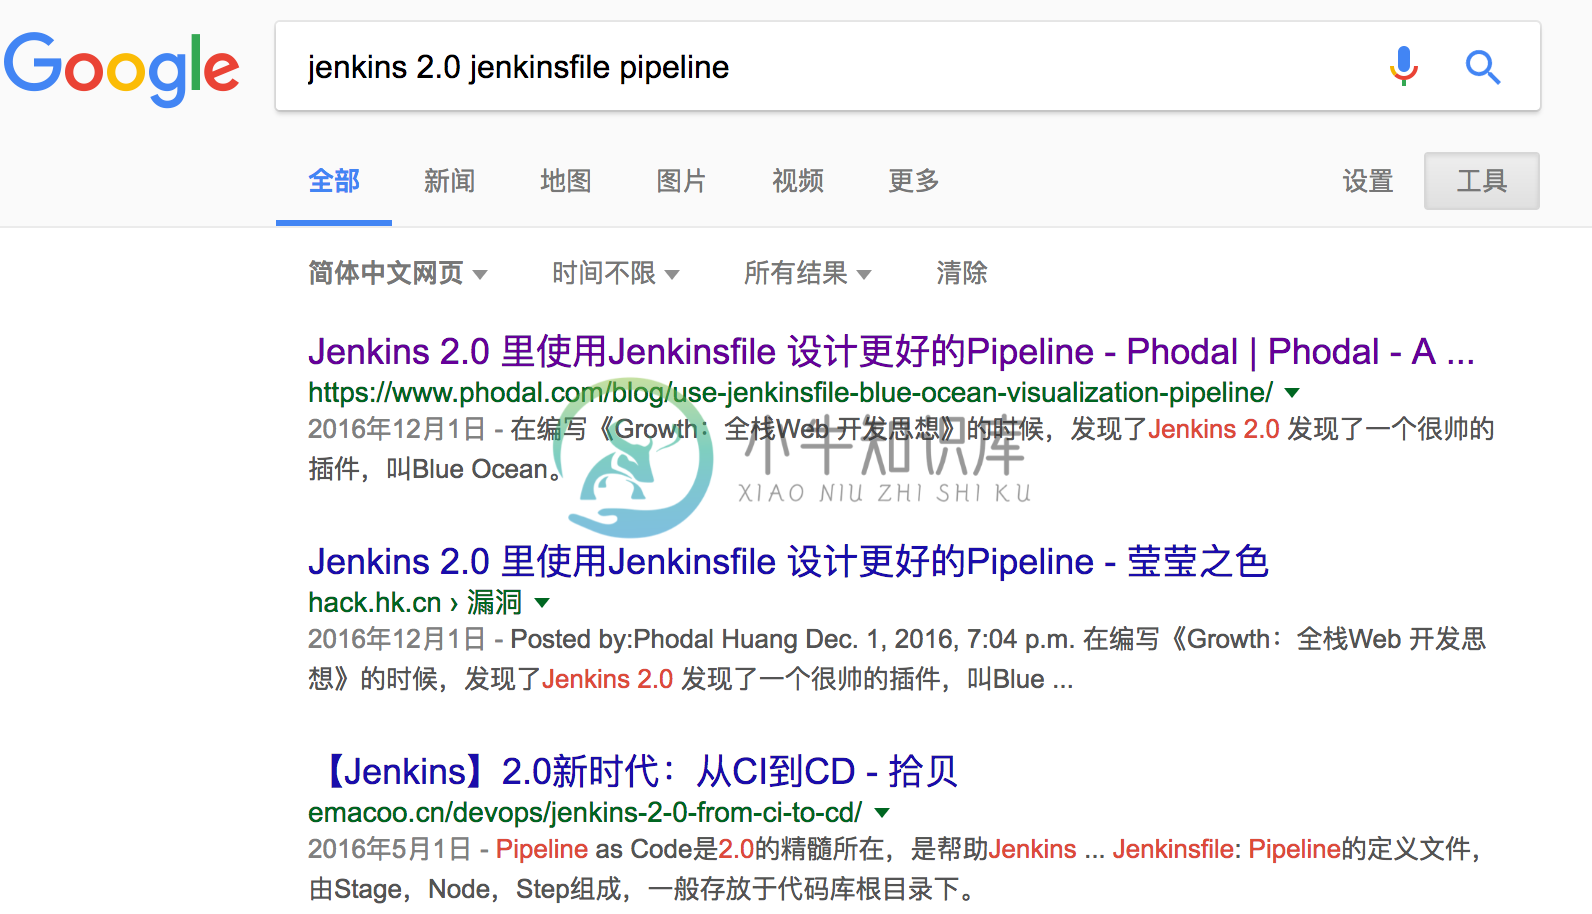 Google jenkins 2.0 pipeline